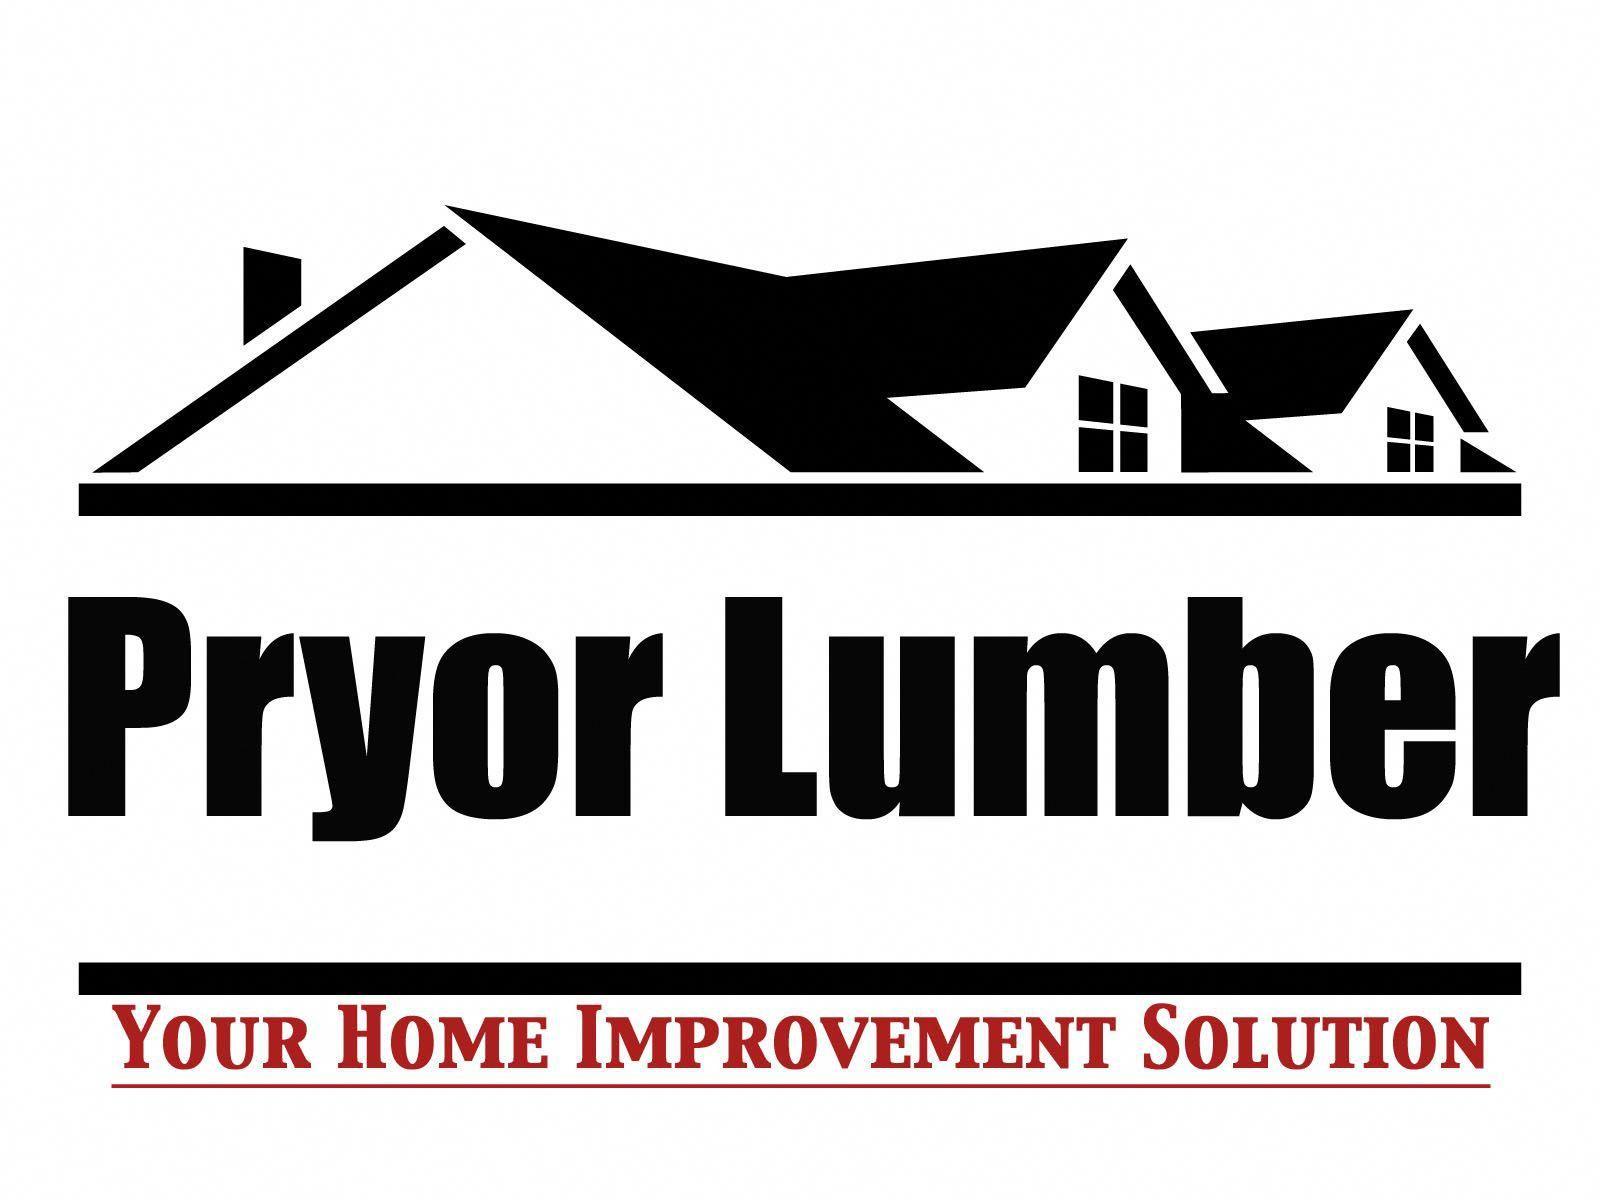 Home Improvement Company Logo - Home Improvement Companies Logos - info on affording house repairs ...